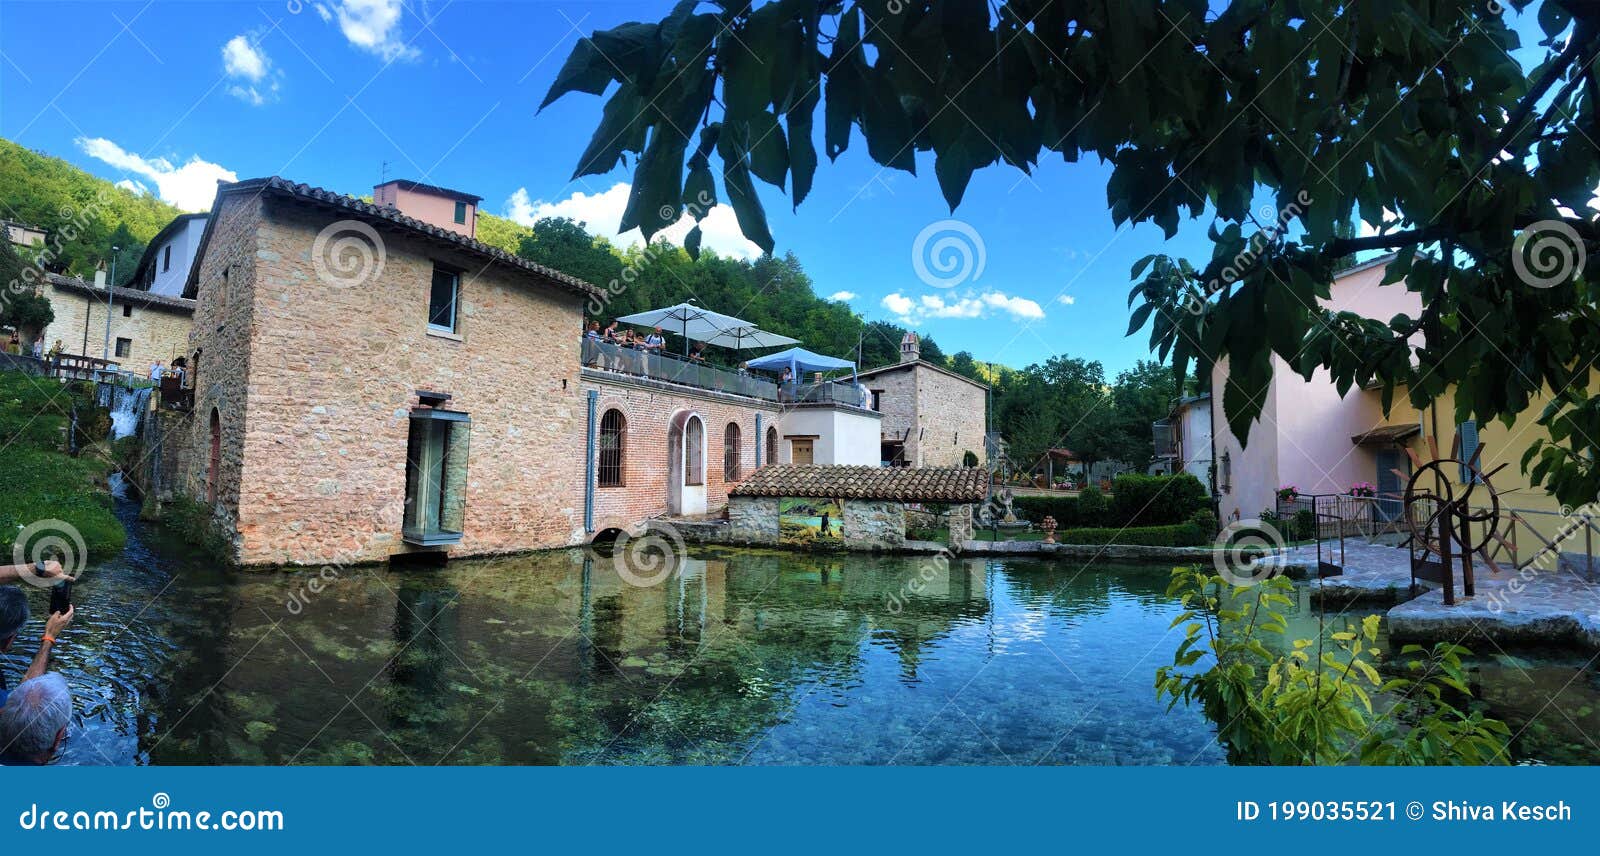 rasiglia, the village of the water streams, umbria region, italy. nature, tourism and splendour